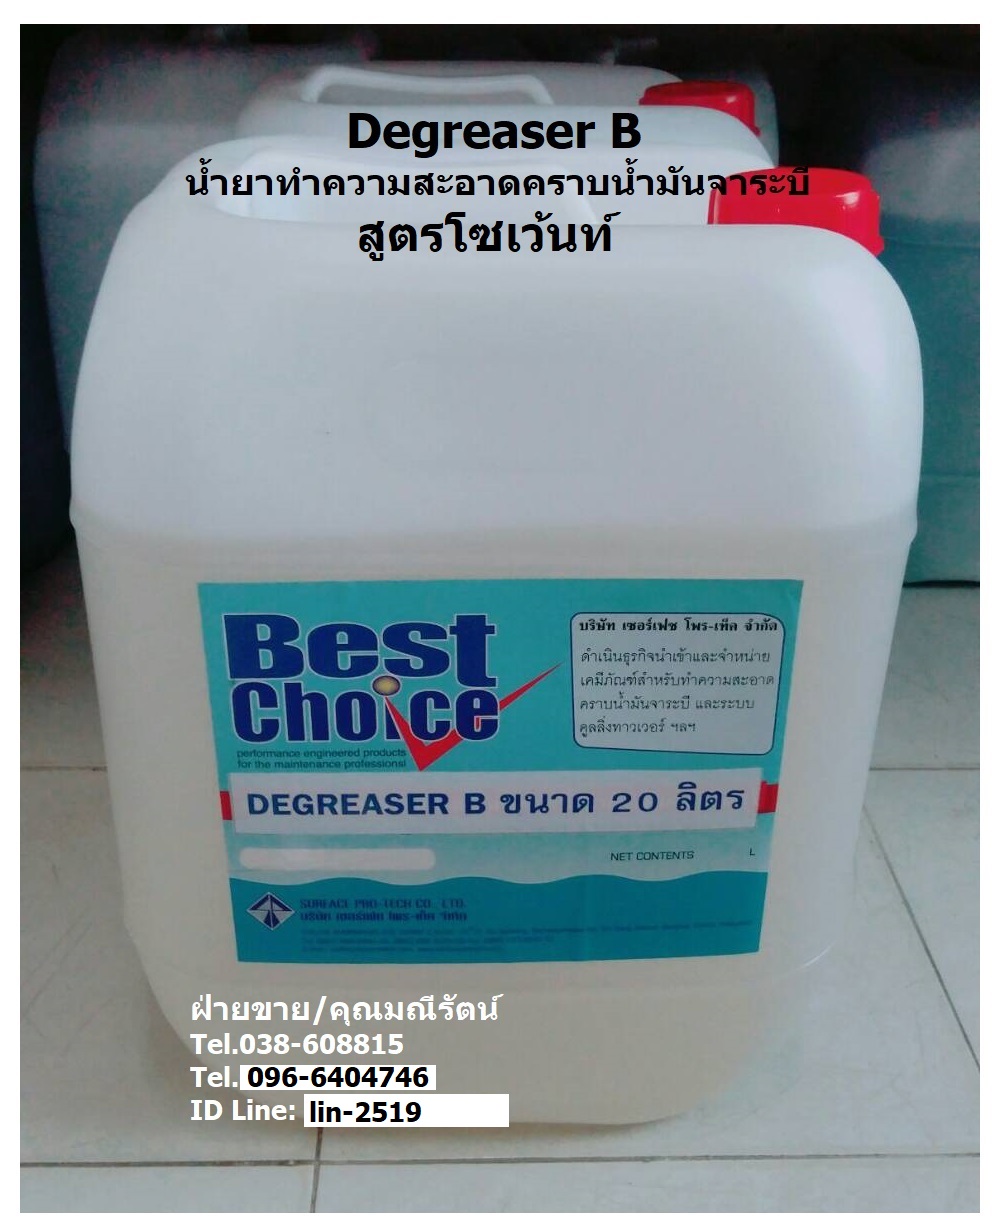 Best Choice Degreaser B น้ำยาล้างทำความสะอาดคราบน้ำมันจาระบีสูตรโซเว้น สามารถผสมน้ำได้ สำหรับทำความสะอาดพื้นผิวงานทุกชนิดจากความสกปรก รูปที่ 1